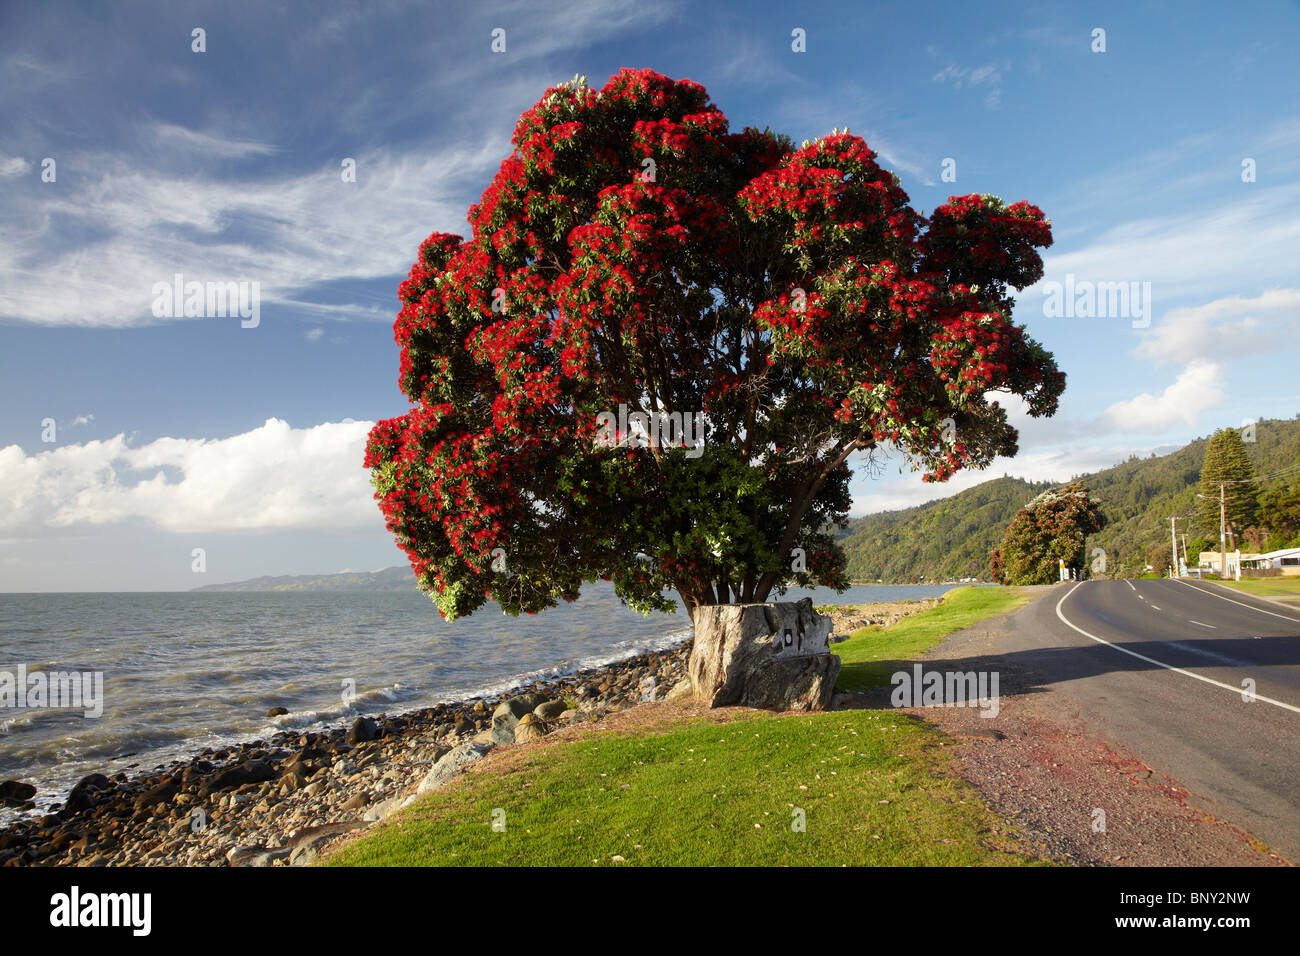 Pohutukawa Tree in Bloom, Ngarimu Bay, Thames Coast, Coromandel Peninsula, North Island, New Zealand Stock Photo